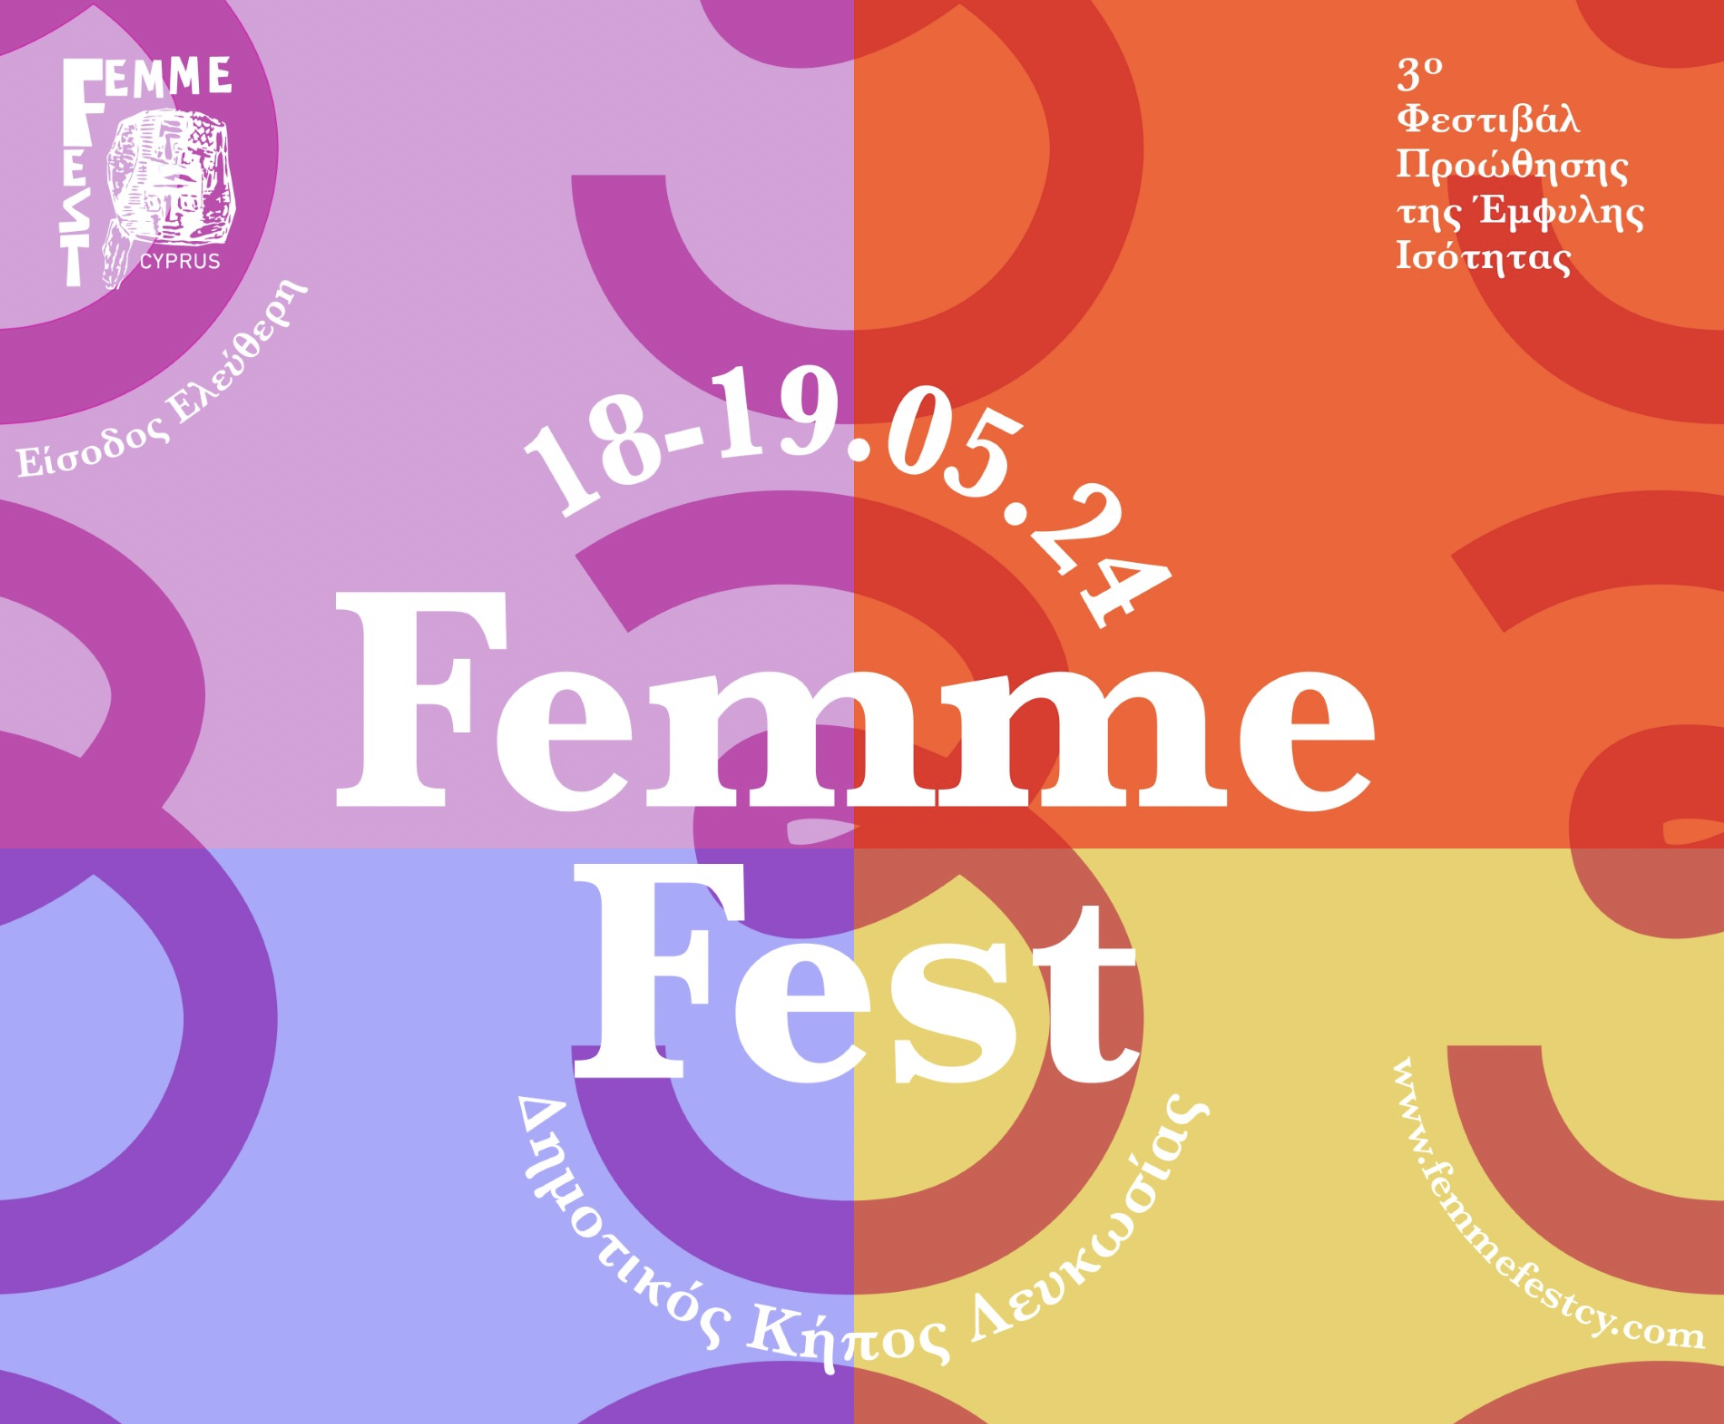 Femme Fest Cyprus: Τι θα δούμε στο 3ο Φεστιβάλ Προώθησης της Ισότητας των Φύλων;